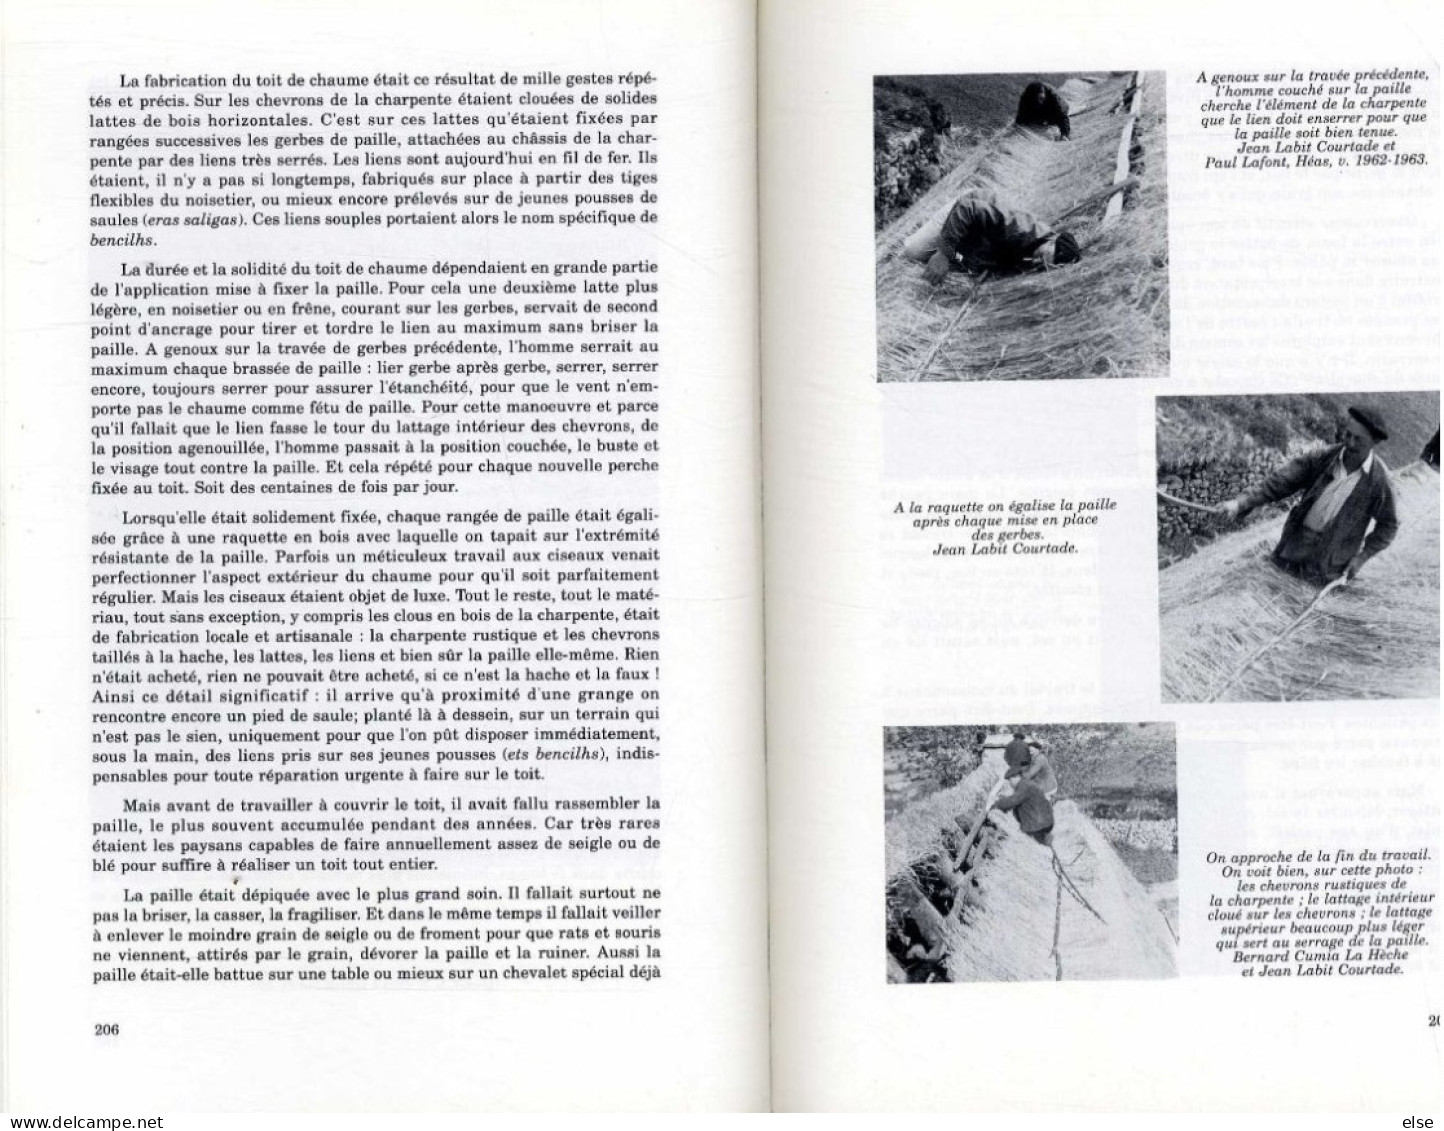 PYRENEES  N° 170 171   N° 2 & 3  1992  -   SPECIAL GAVARNIE   -  LES PYRENEES  PAGE 1 A 127 - Midi-Pyrénées